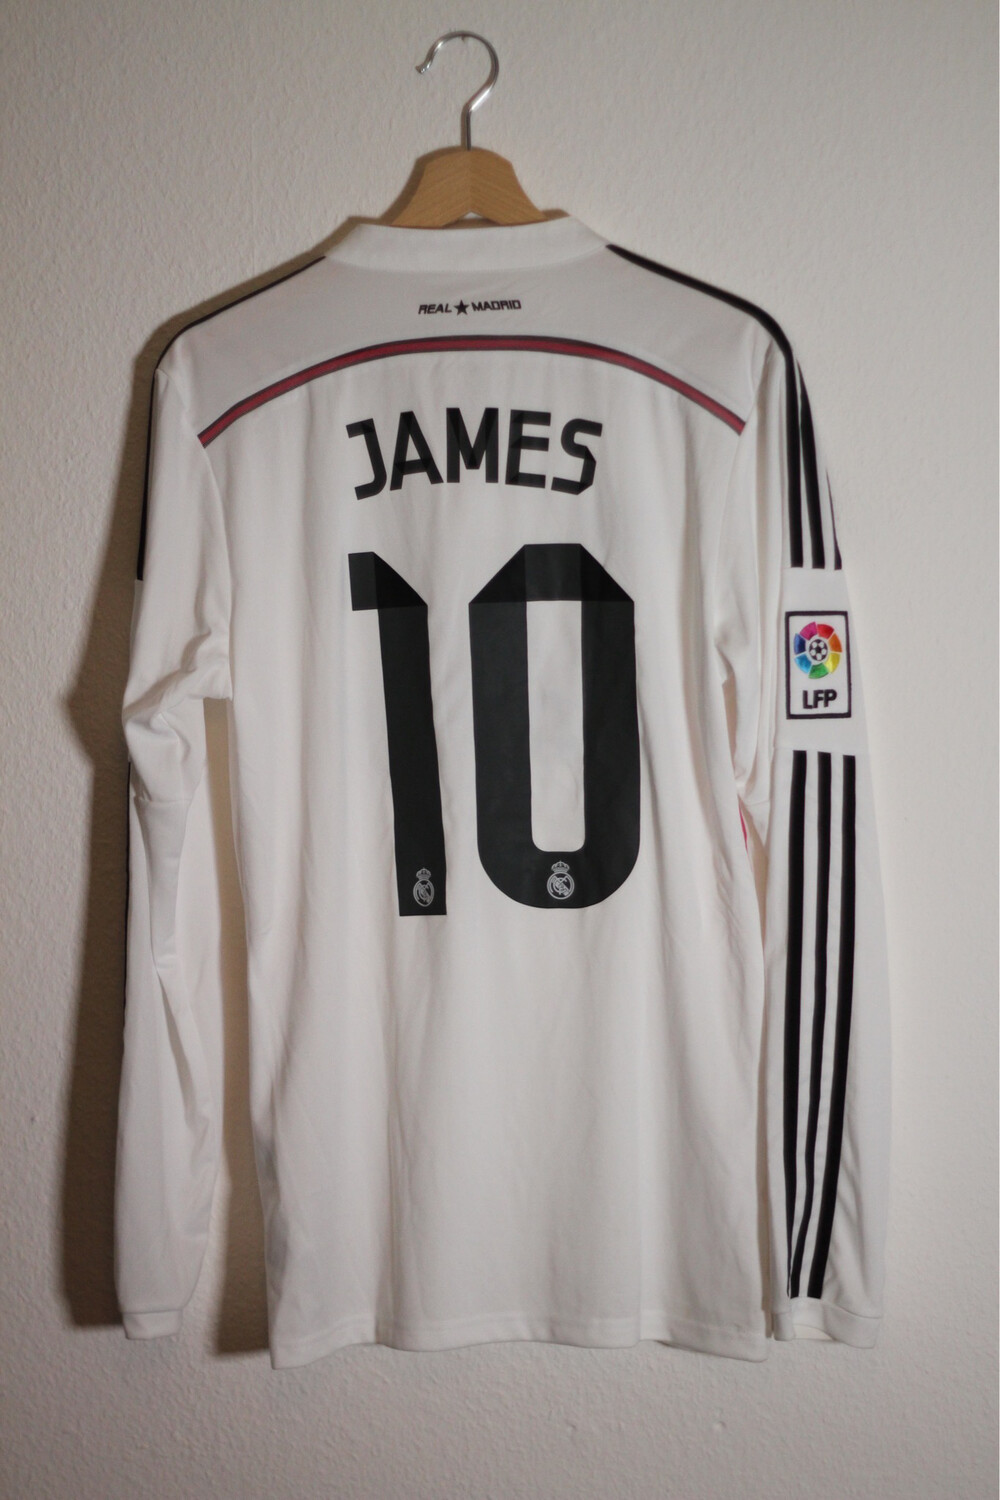 Real Madrid Home 2014/15 #10 JAMES